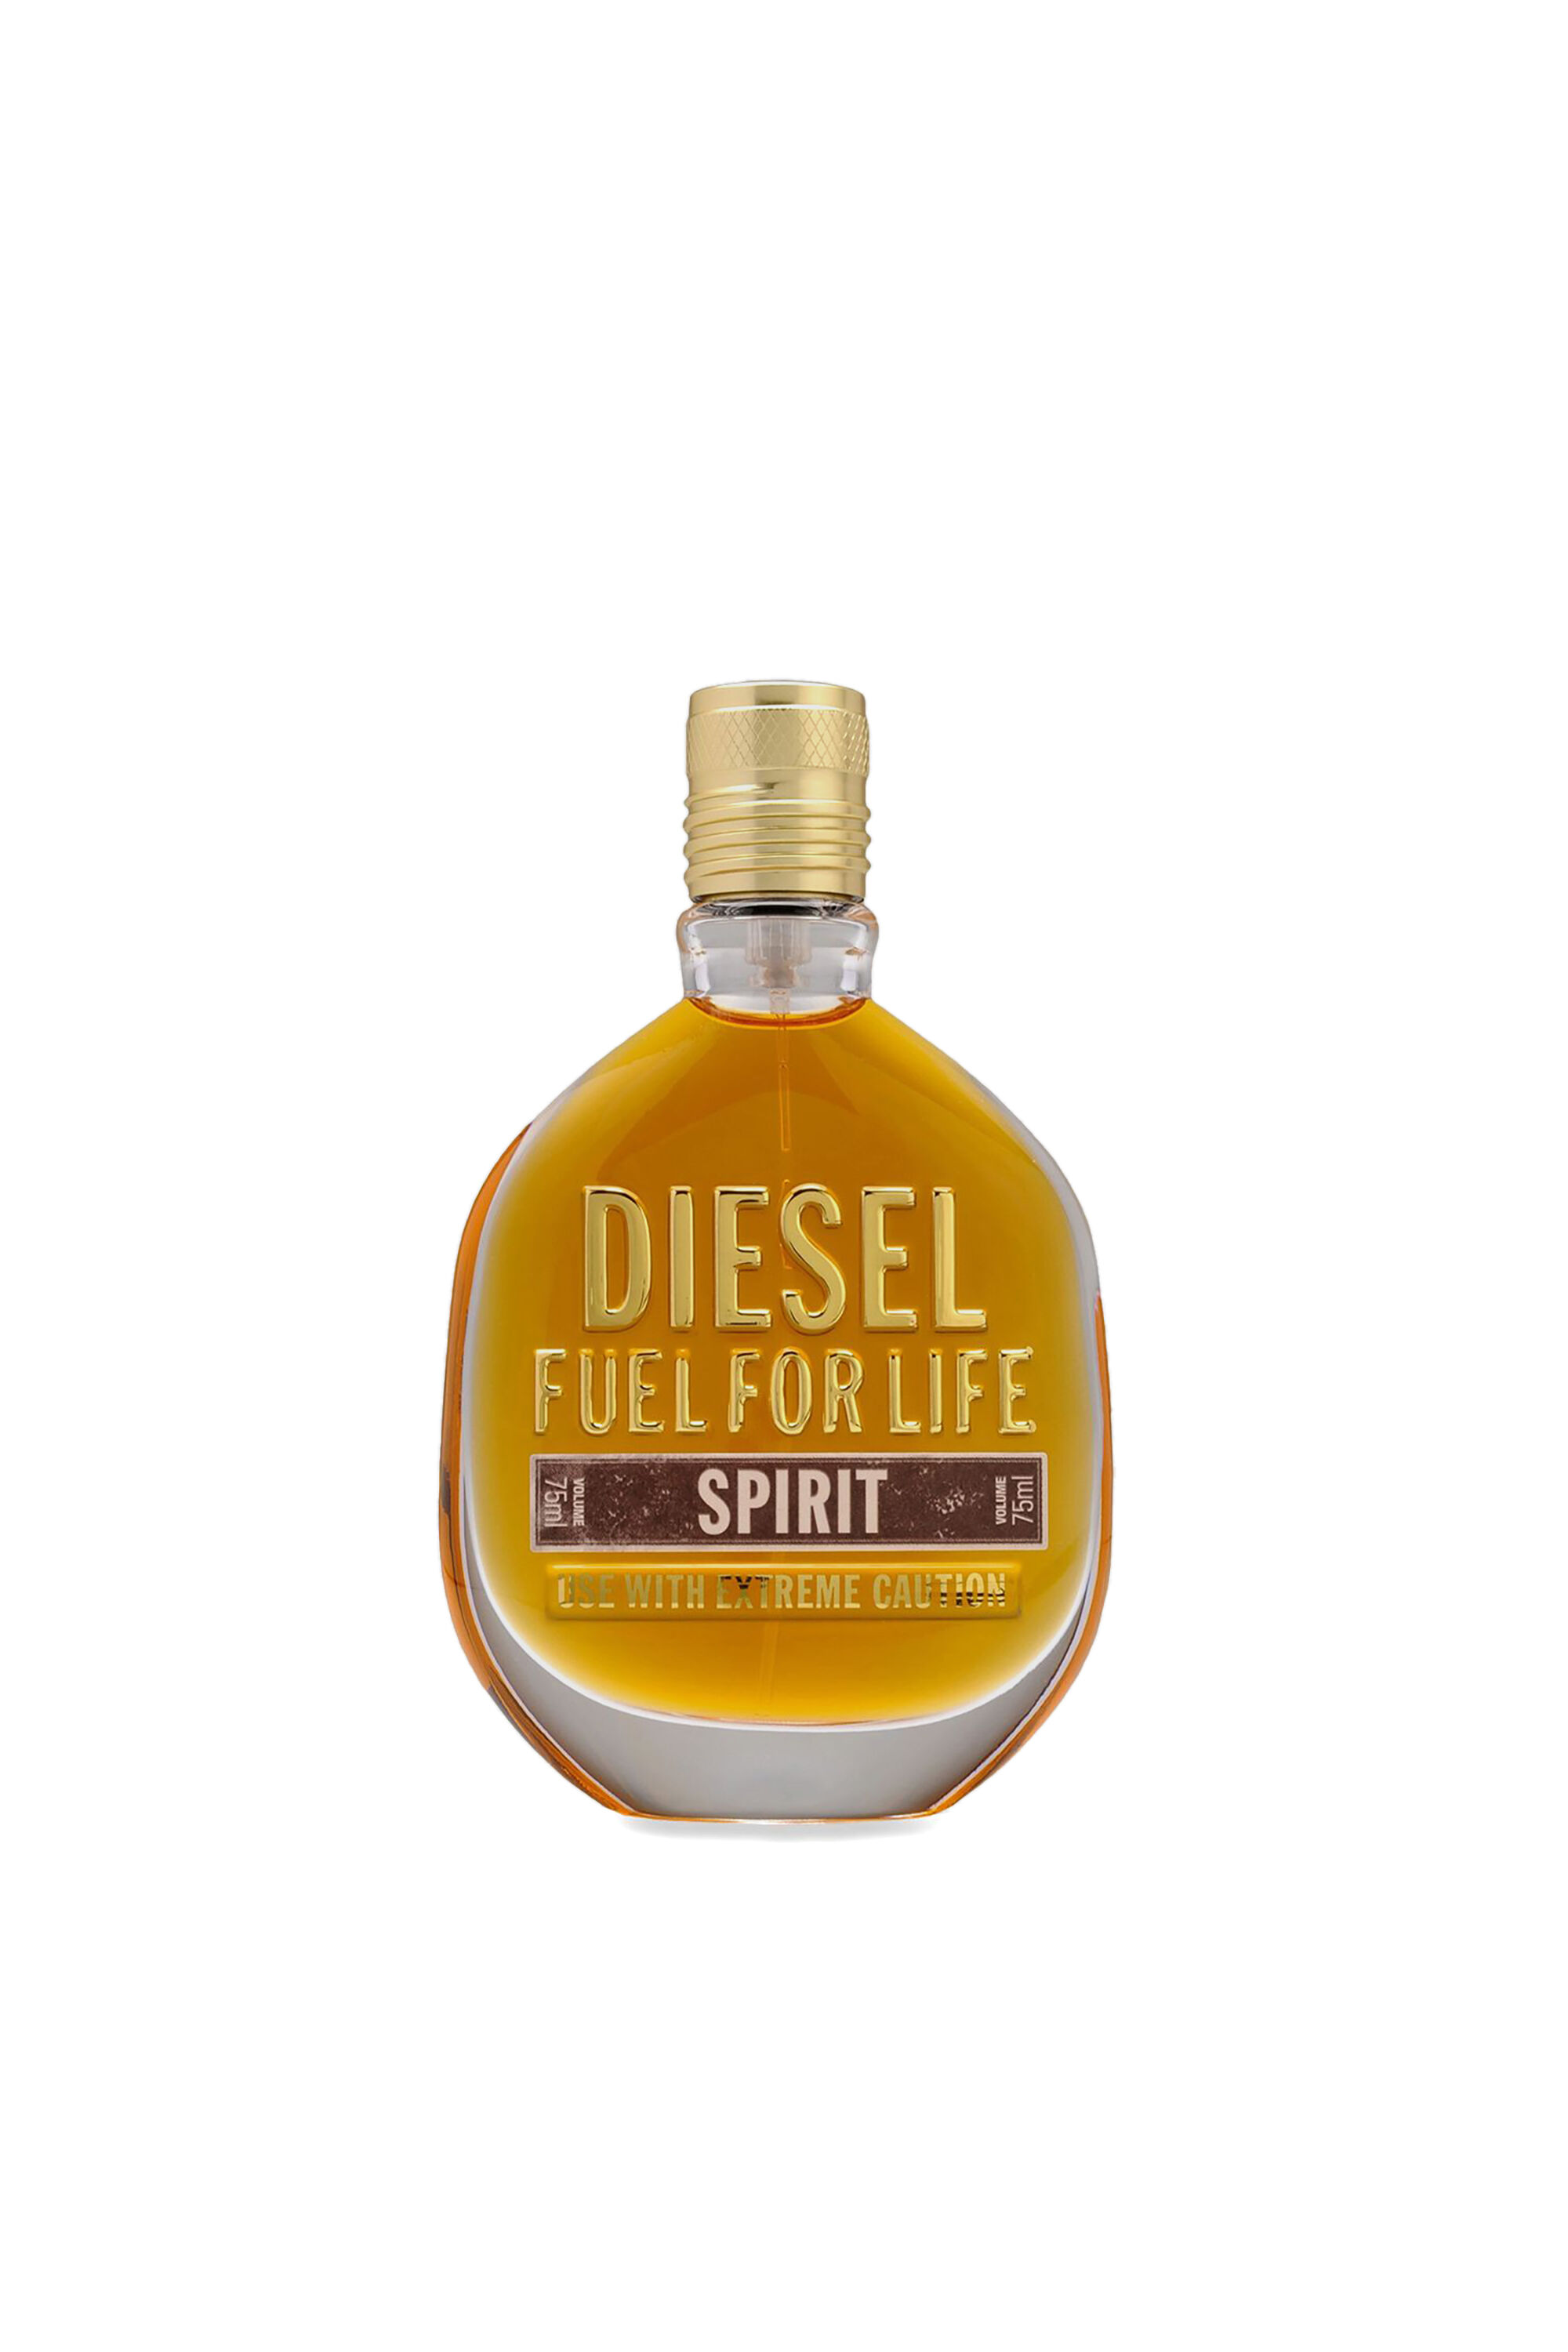 Diesel - FUEL FOR LIFE SPIRIT 75ML, Generico - Image 2